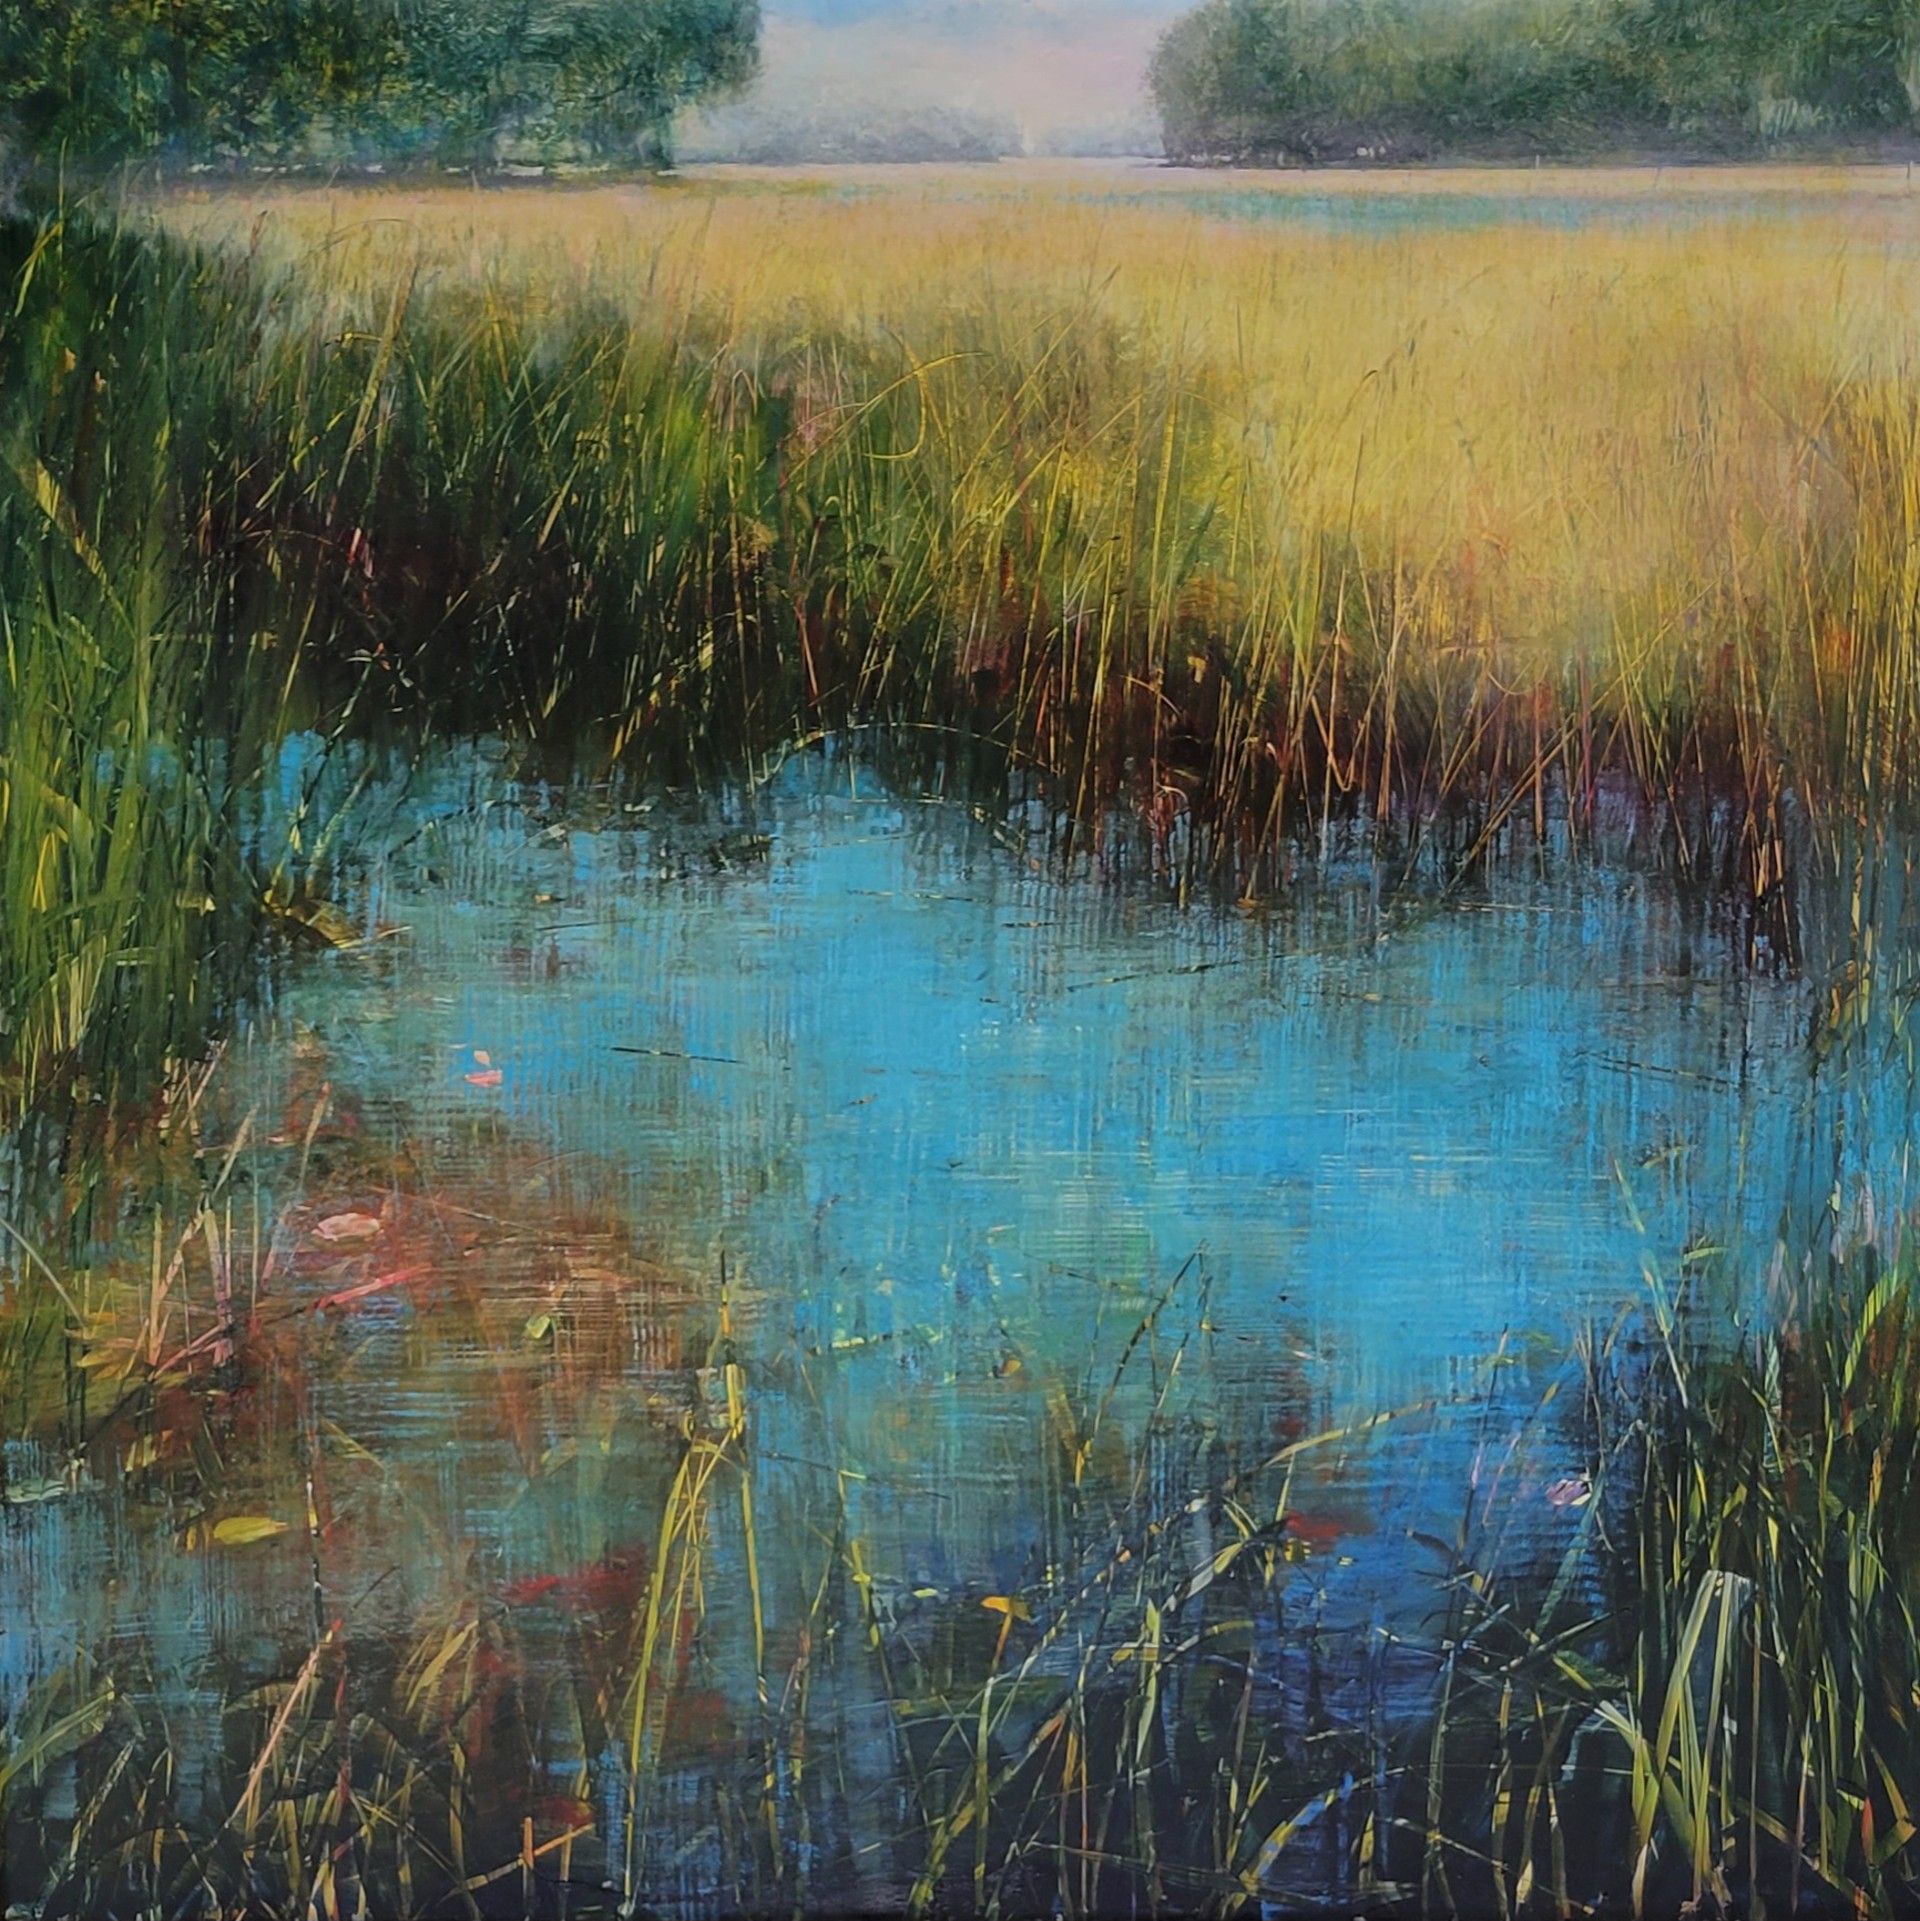 Into an Azure Pond by David Dunlop